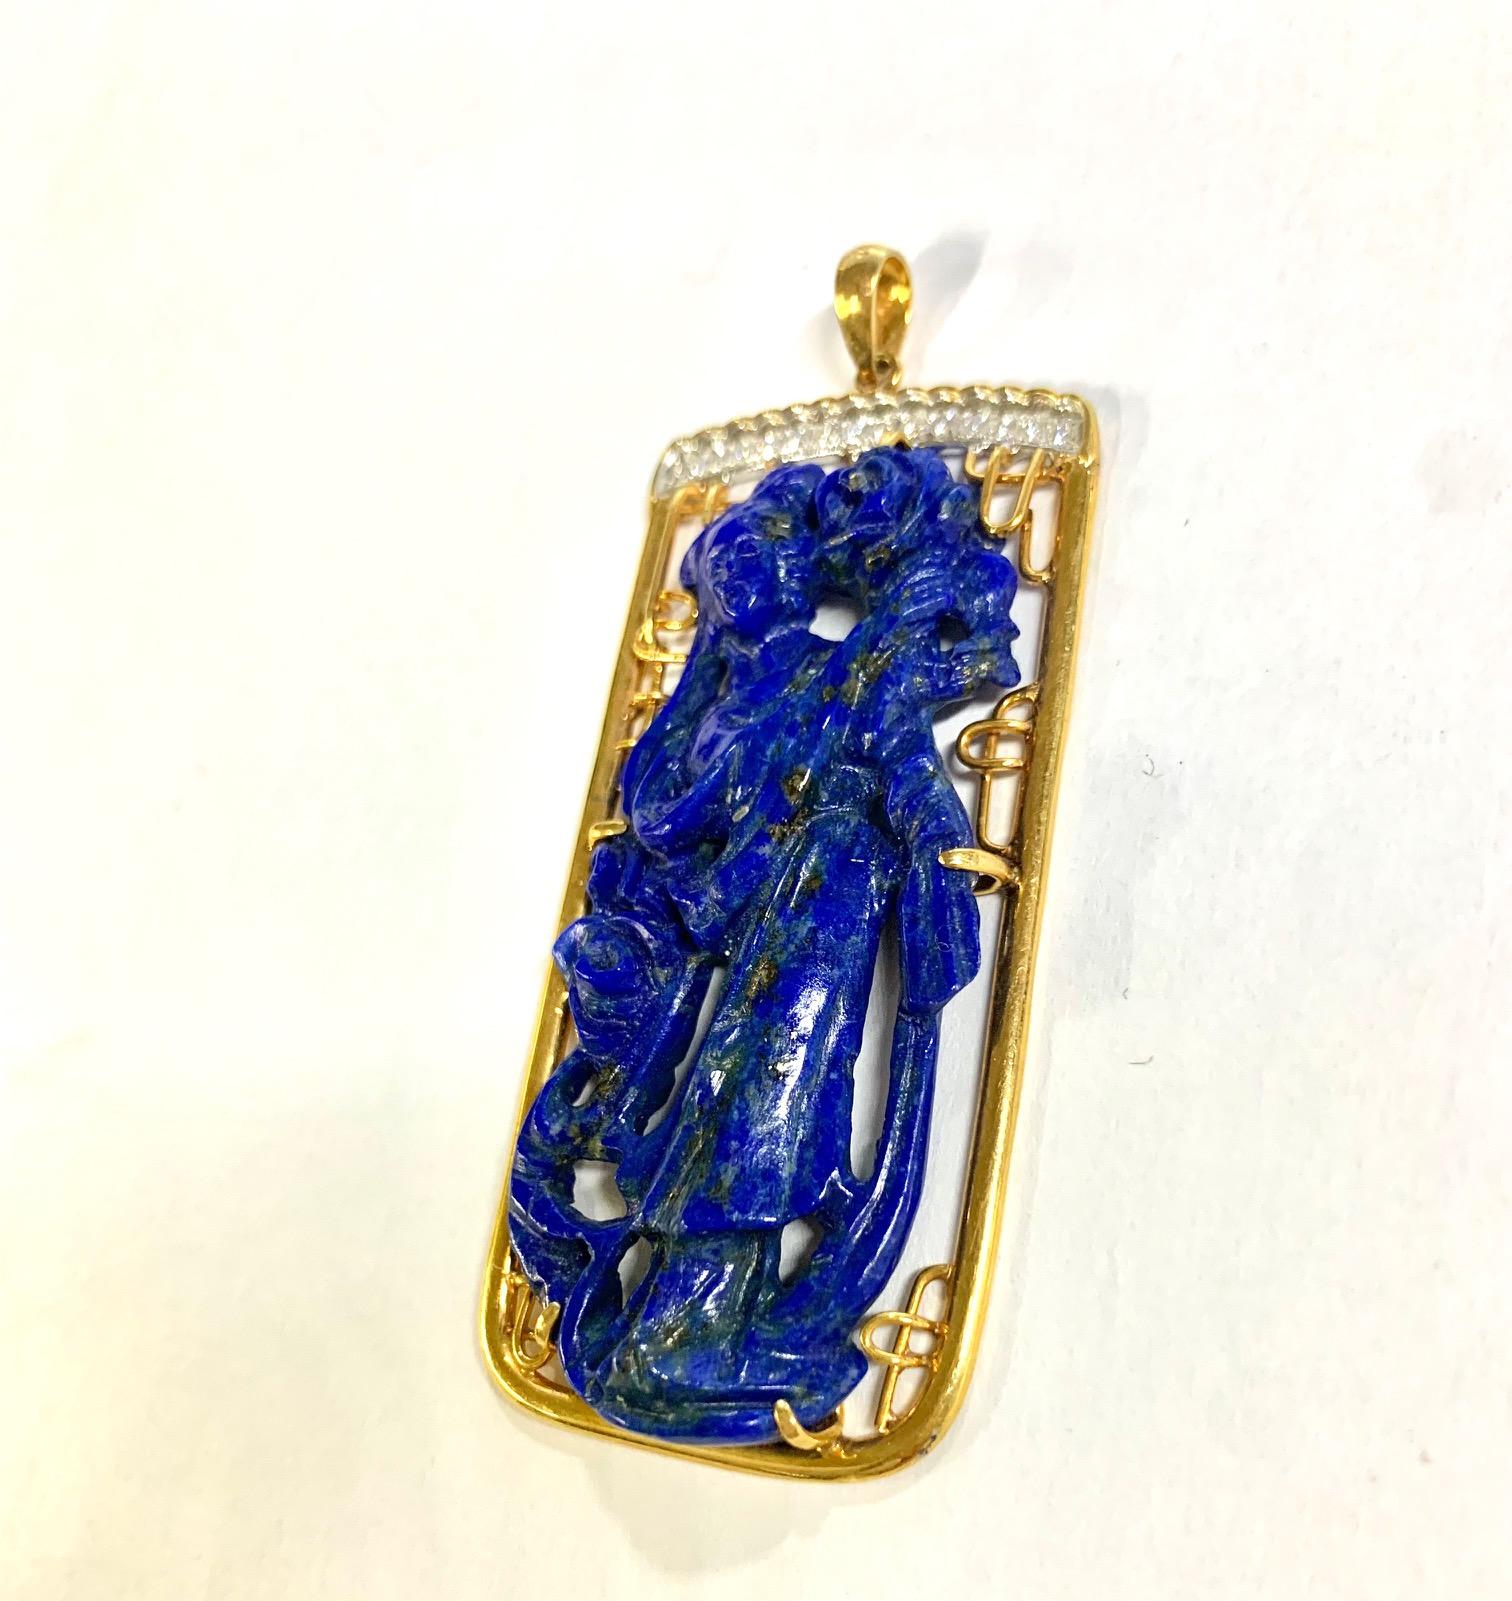 Rare craftsmanship Lady Chinoiserie Lapis Lazuli and Diamond Pendant

Stone: Diamonds
Stone Carat Weight: 0.14 Carat
Stone: Lapis Lazuli
Pendant: 2.25 x 1 Inches
Total Pendant Length: 2.7x1.2 Inches
Weight: 17.2 Grams 
Material: 14K Yellow Gold

No